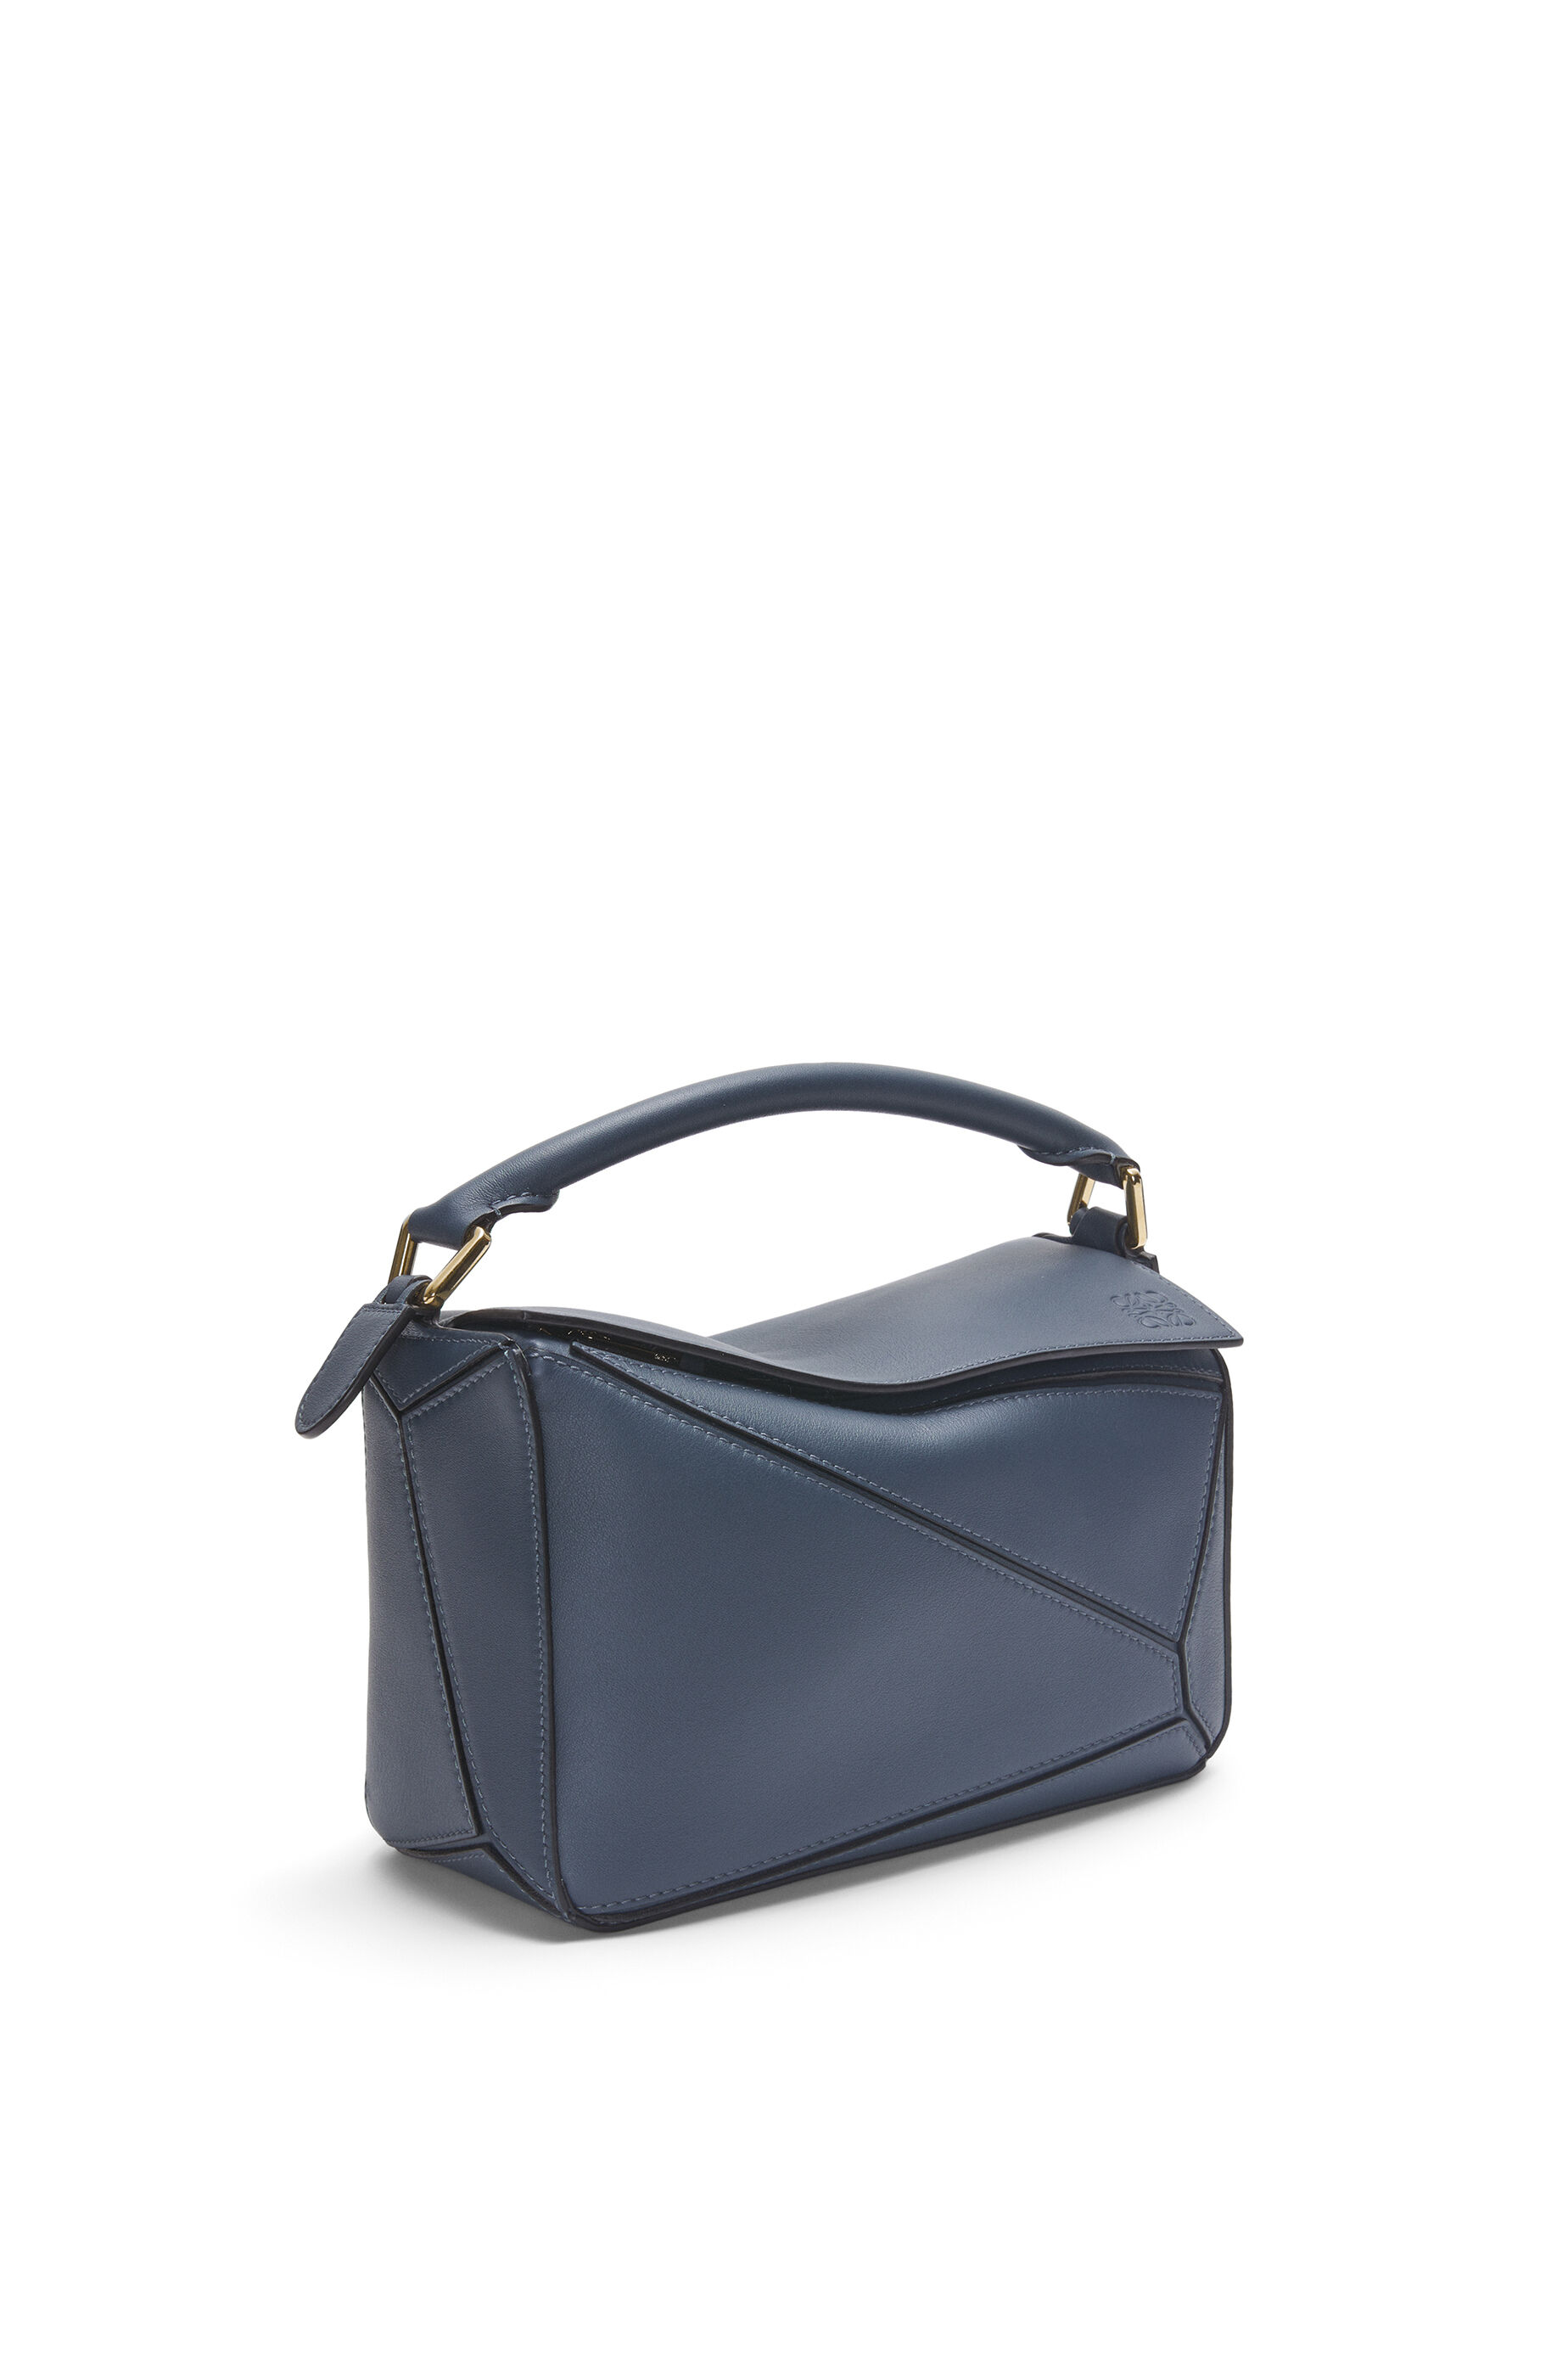 Loewe Small Puzzle Bag | Rent Loewe Handbags for $195/month